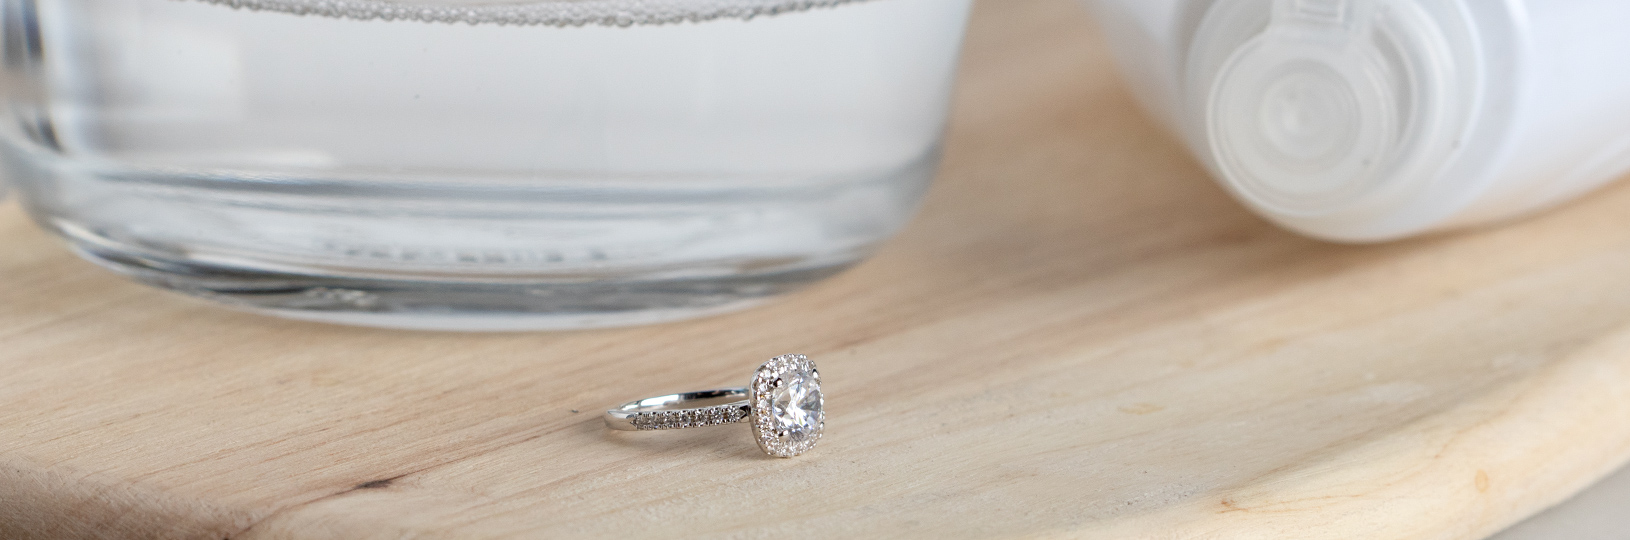 Halo lab diamond engagement ring